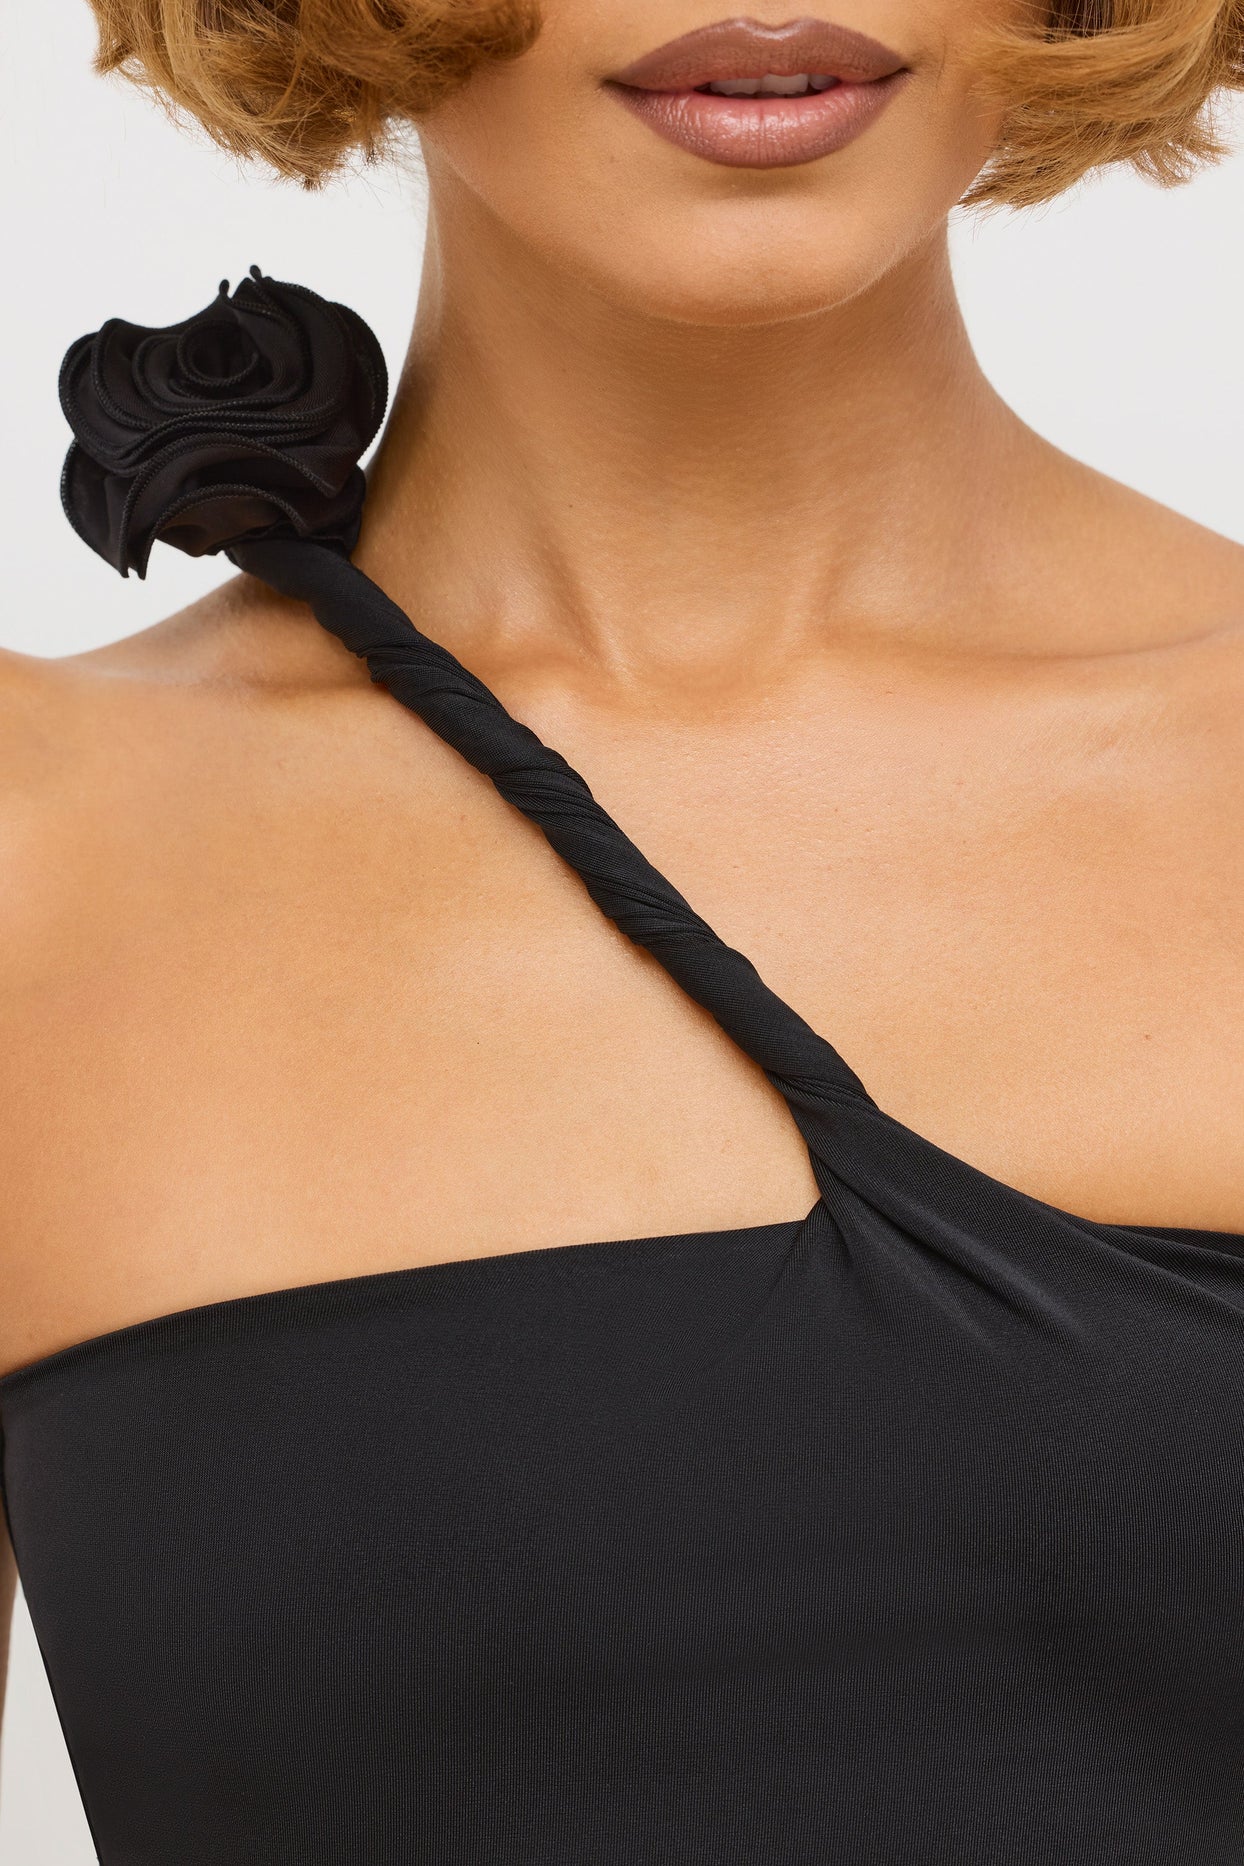 Premium Jersey Asymmetric Cut Out Maxi Dress in Black